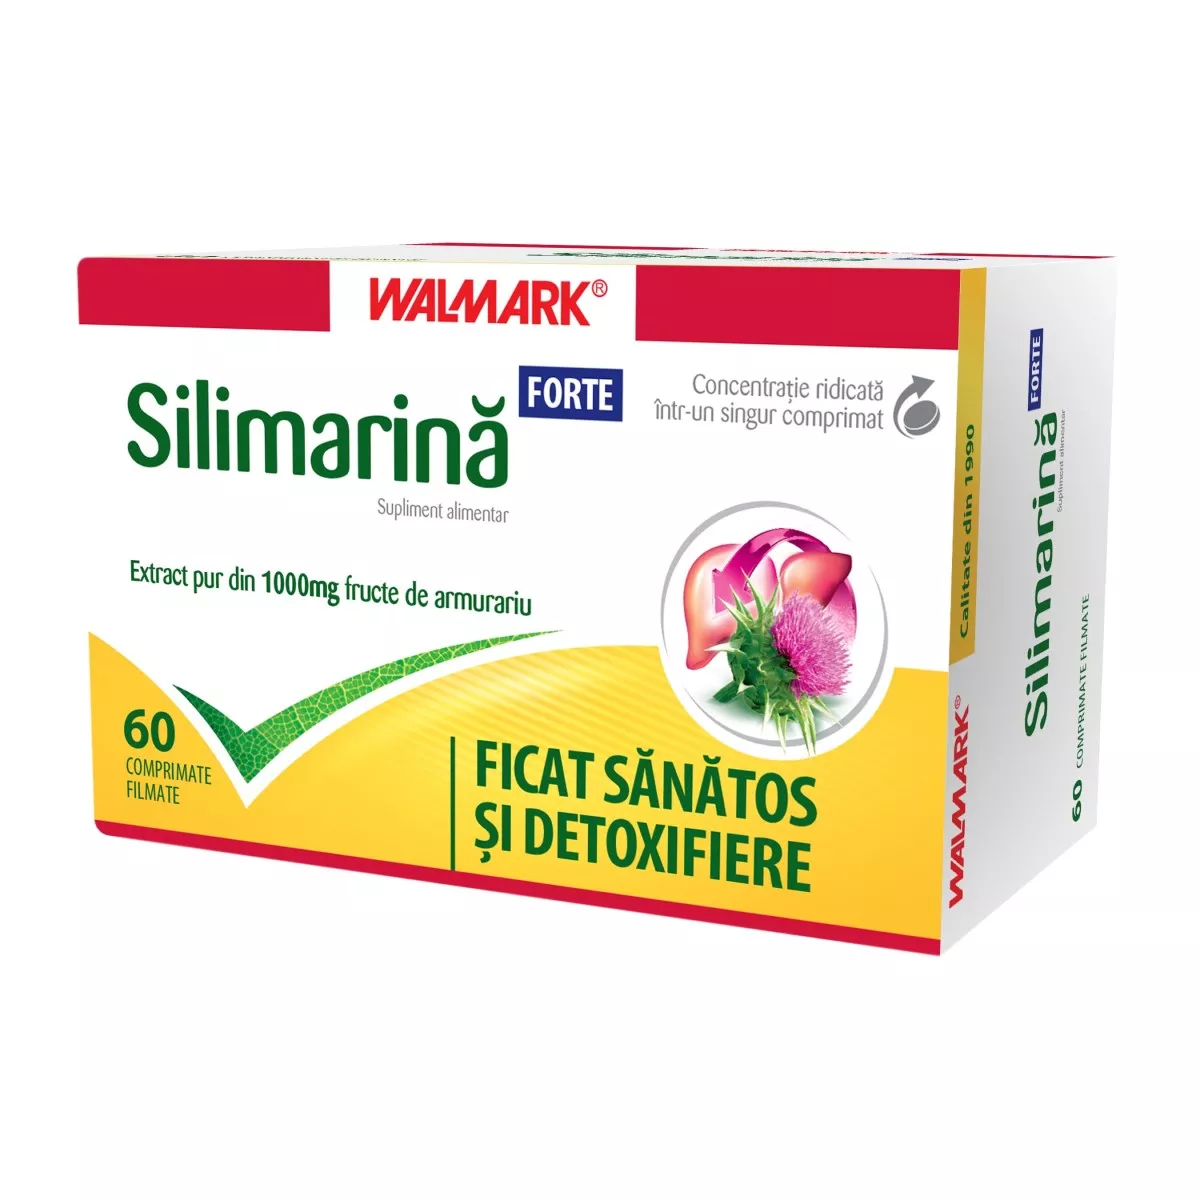 Silimarina Forte, 60 comprimate, Walmark, [],nordpharm.ro